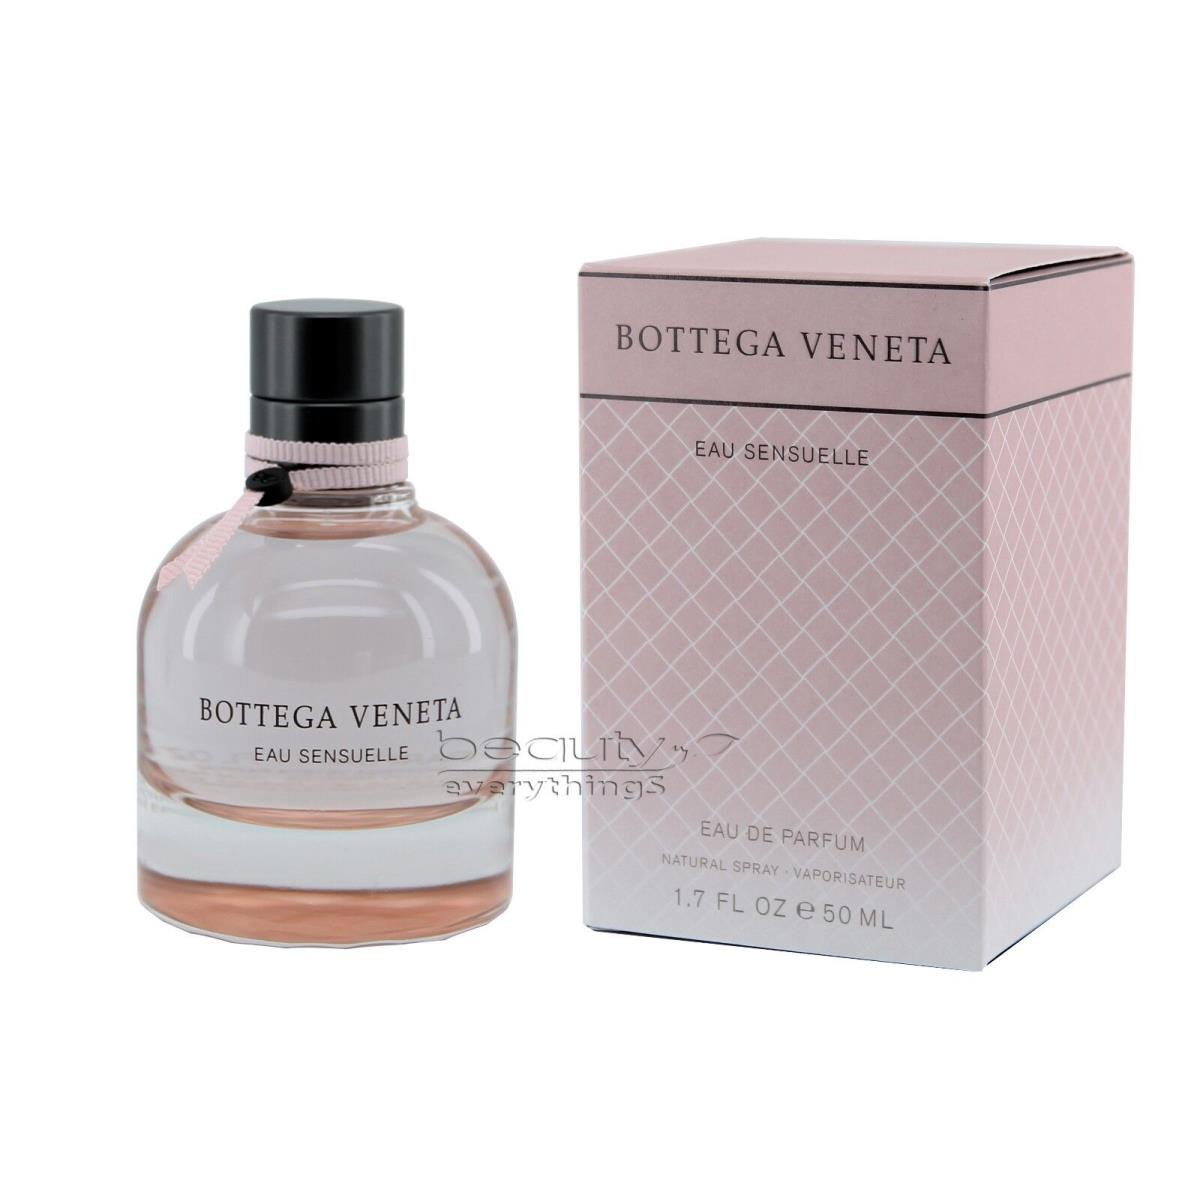 Bottega Veneta Eau Sensuelle 1.7oz / 50ml Edp Spray Women`s Perfume